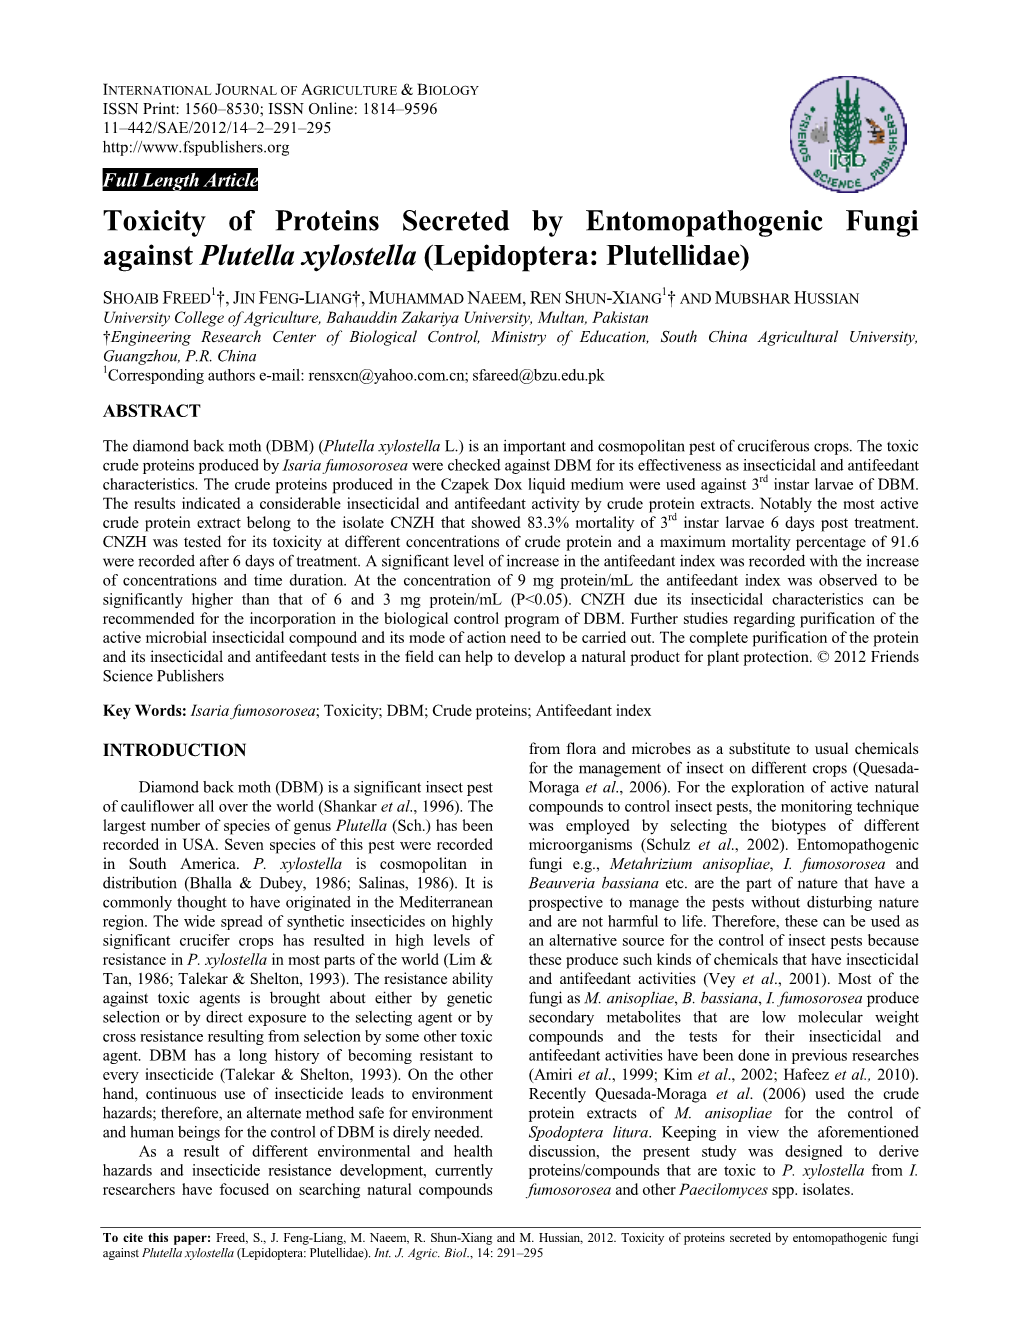 Toxicity of Proteins Secreted by Entomopathogenic Fungi Against Plutella Xylostella (Lepidoptera: Plutellidae)